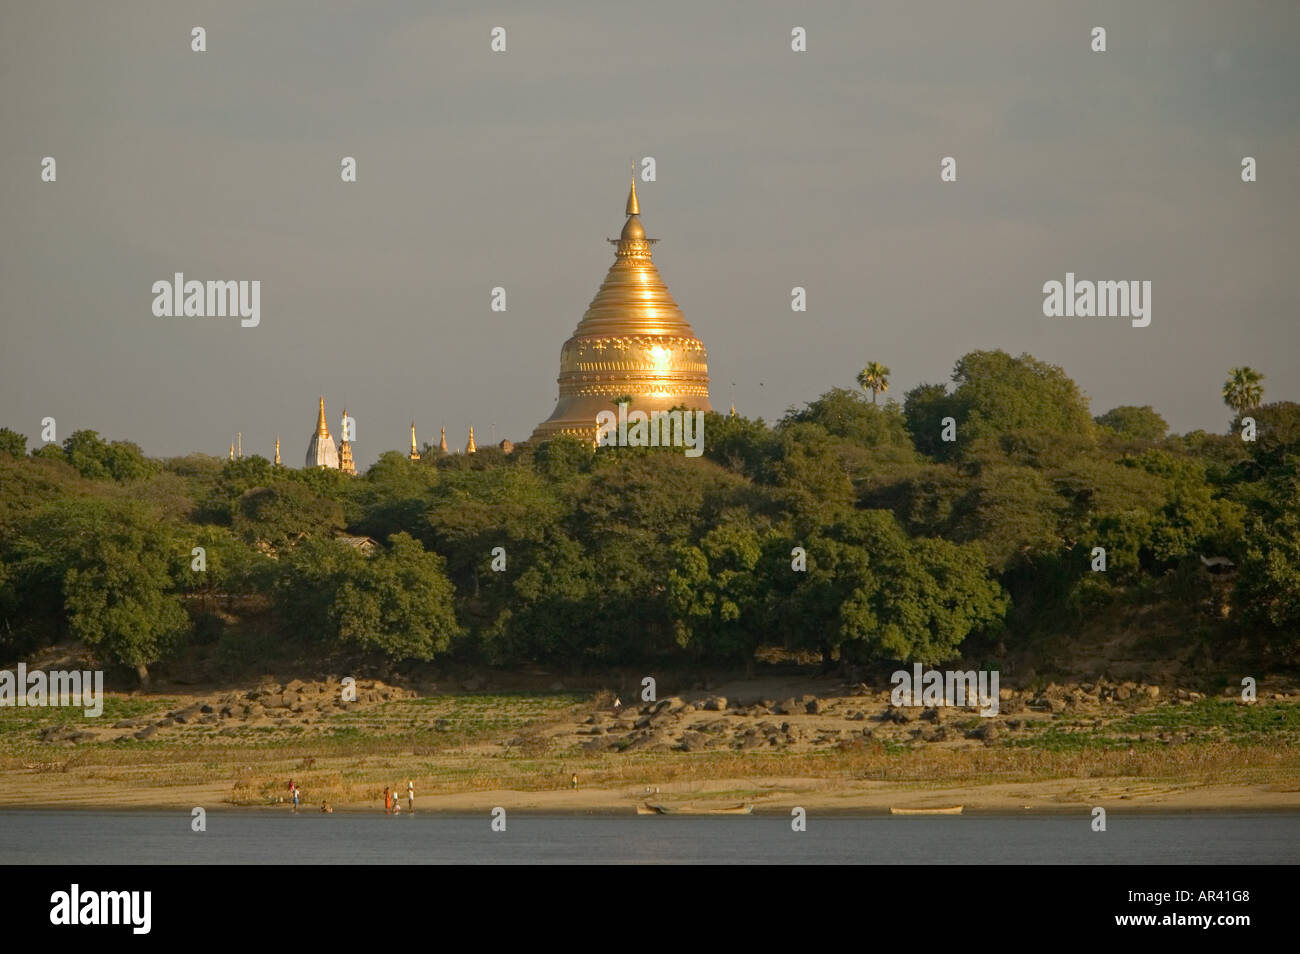 La pagoda dorata, Bagan, pagoda dorata, Bagan, vista dal fiume, Ansicht der Goldenen Pagode vom Schiff Foto Stock